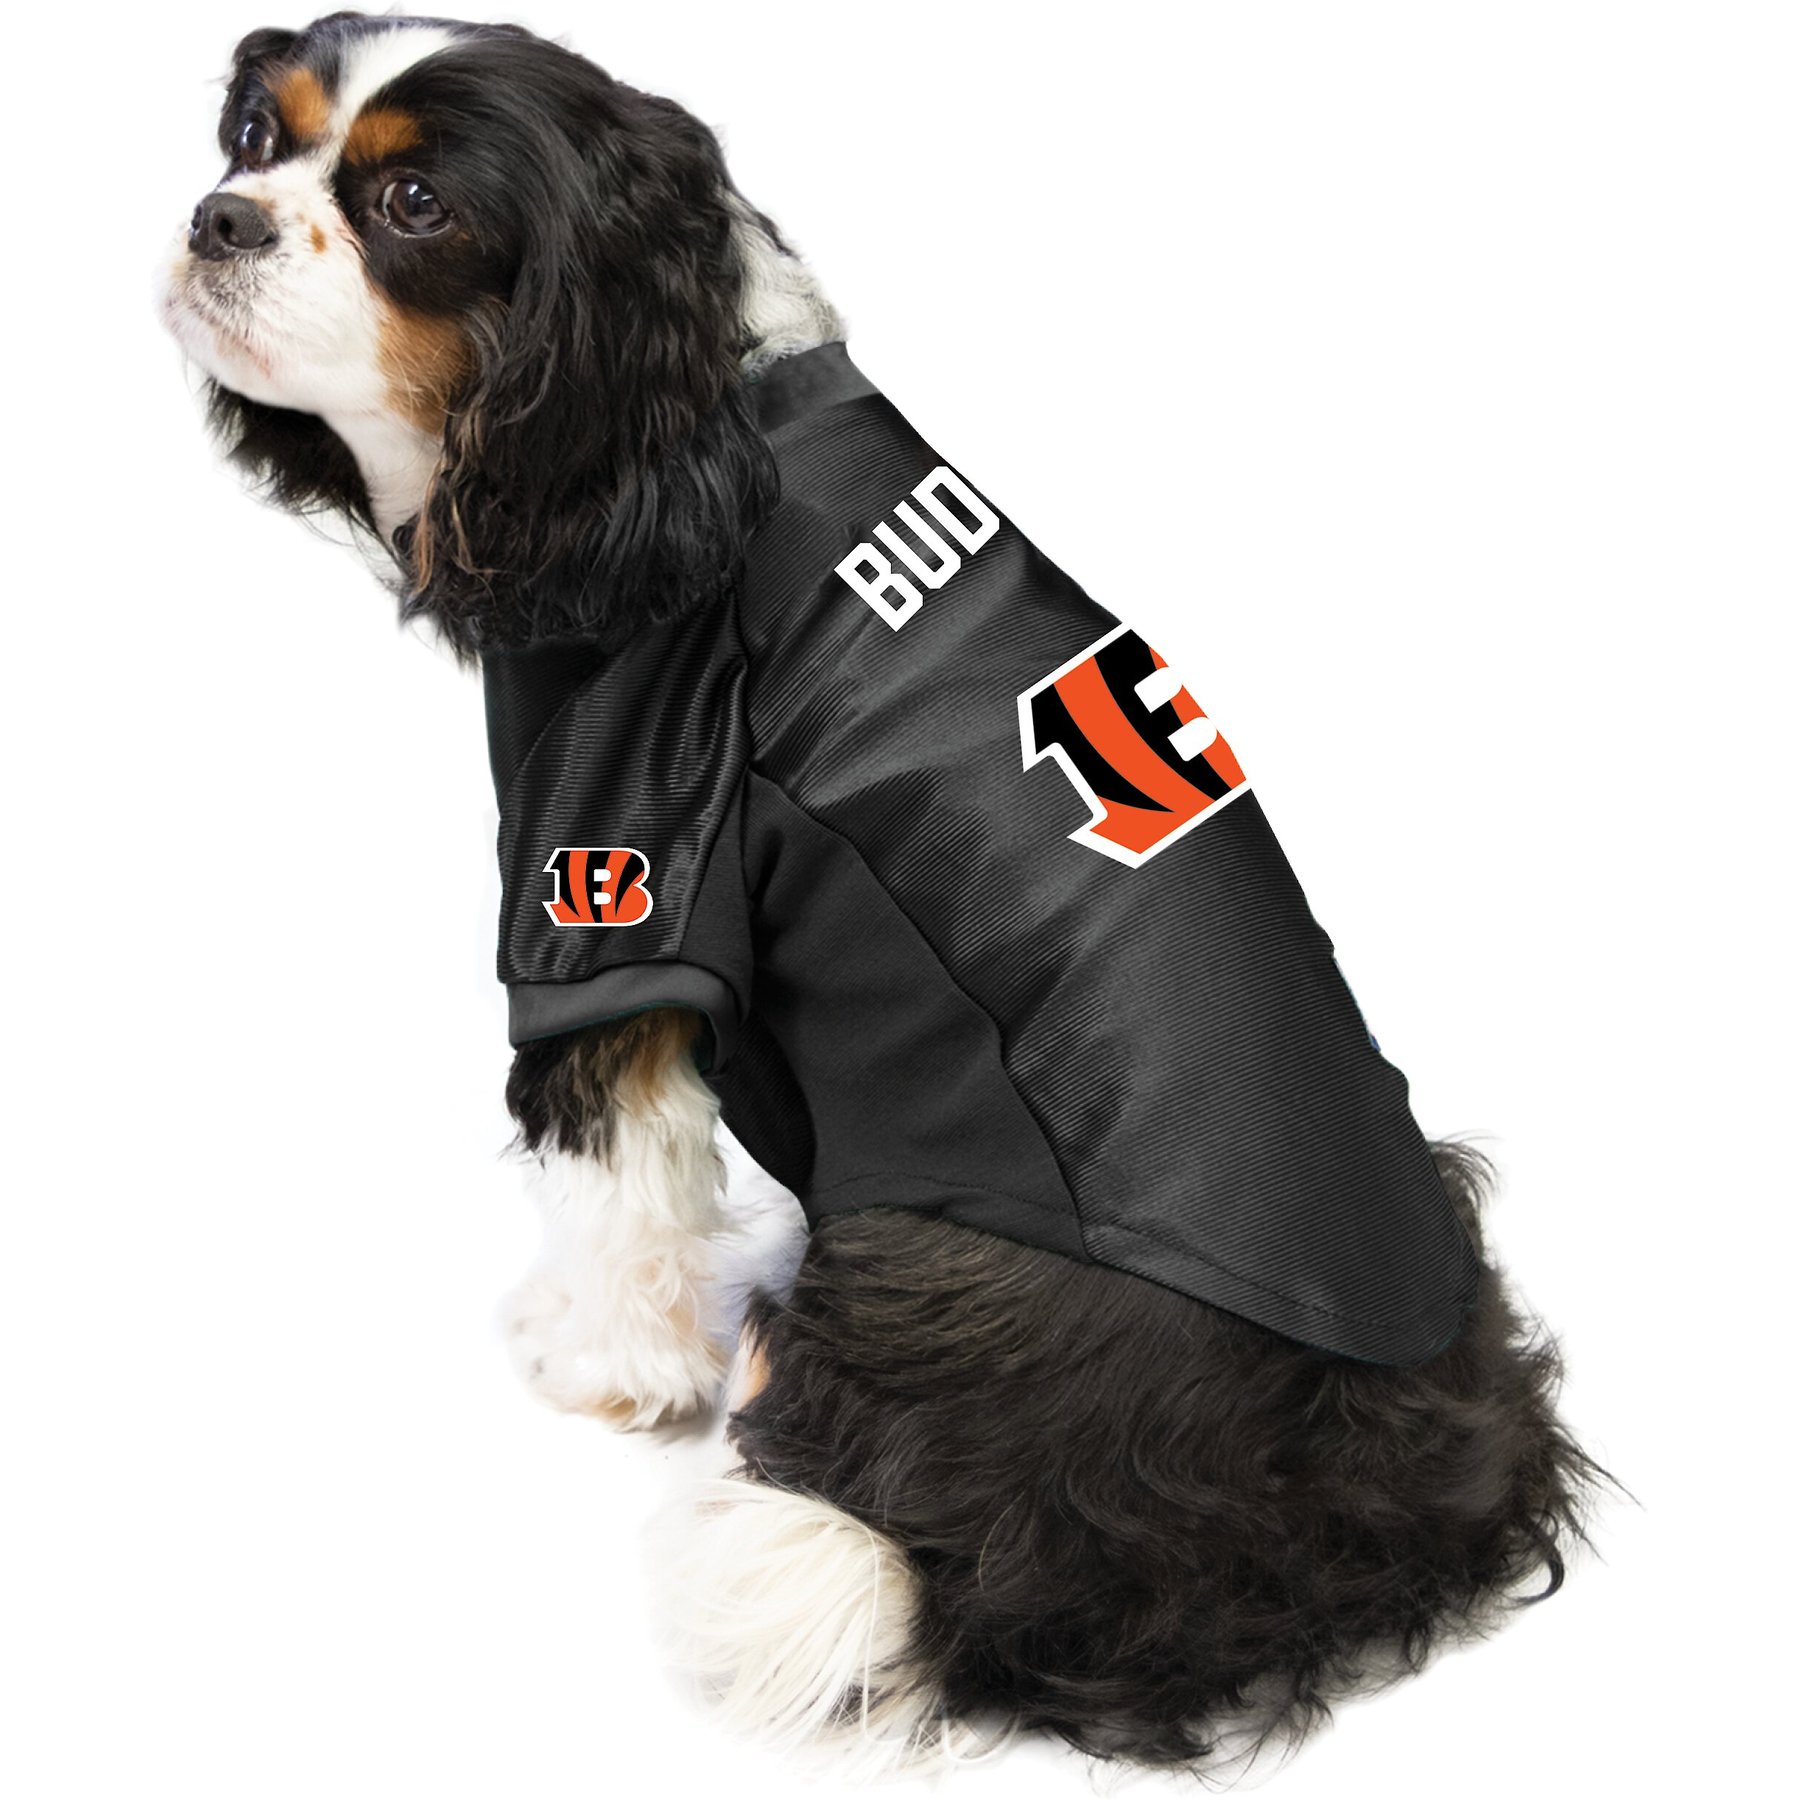 LITTLEARTH NFL Personalized Stretch Dog & Cat Jersey, Cincinnati Bengals,  Small 